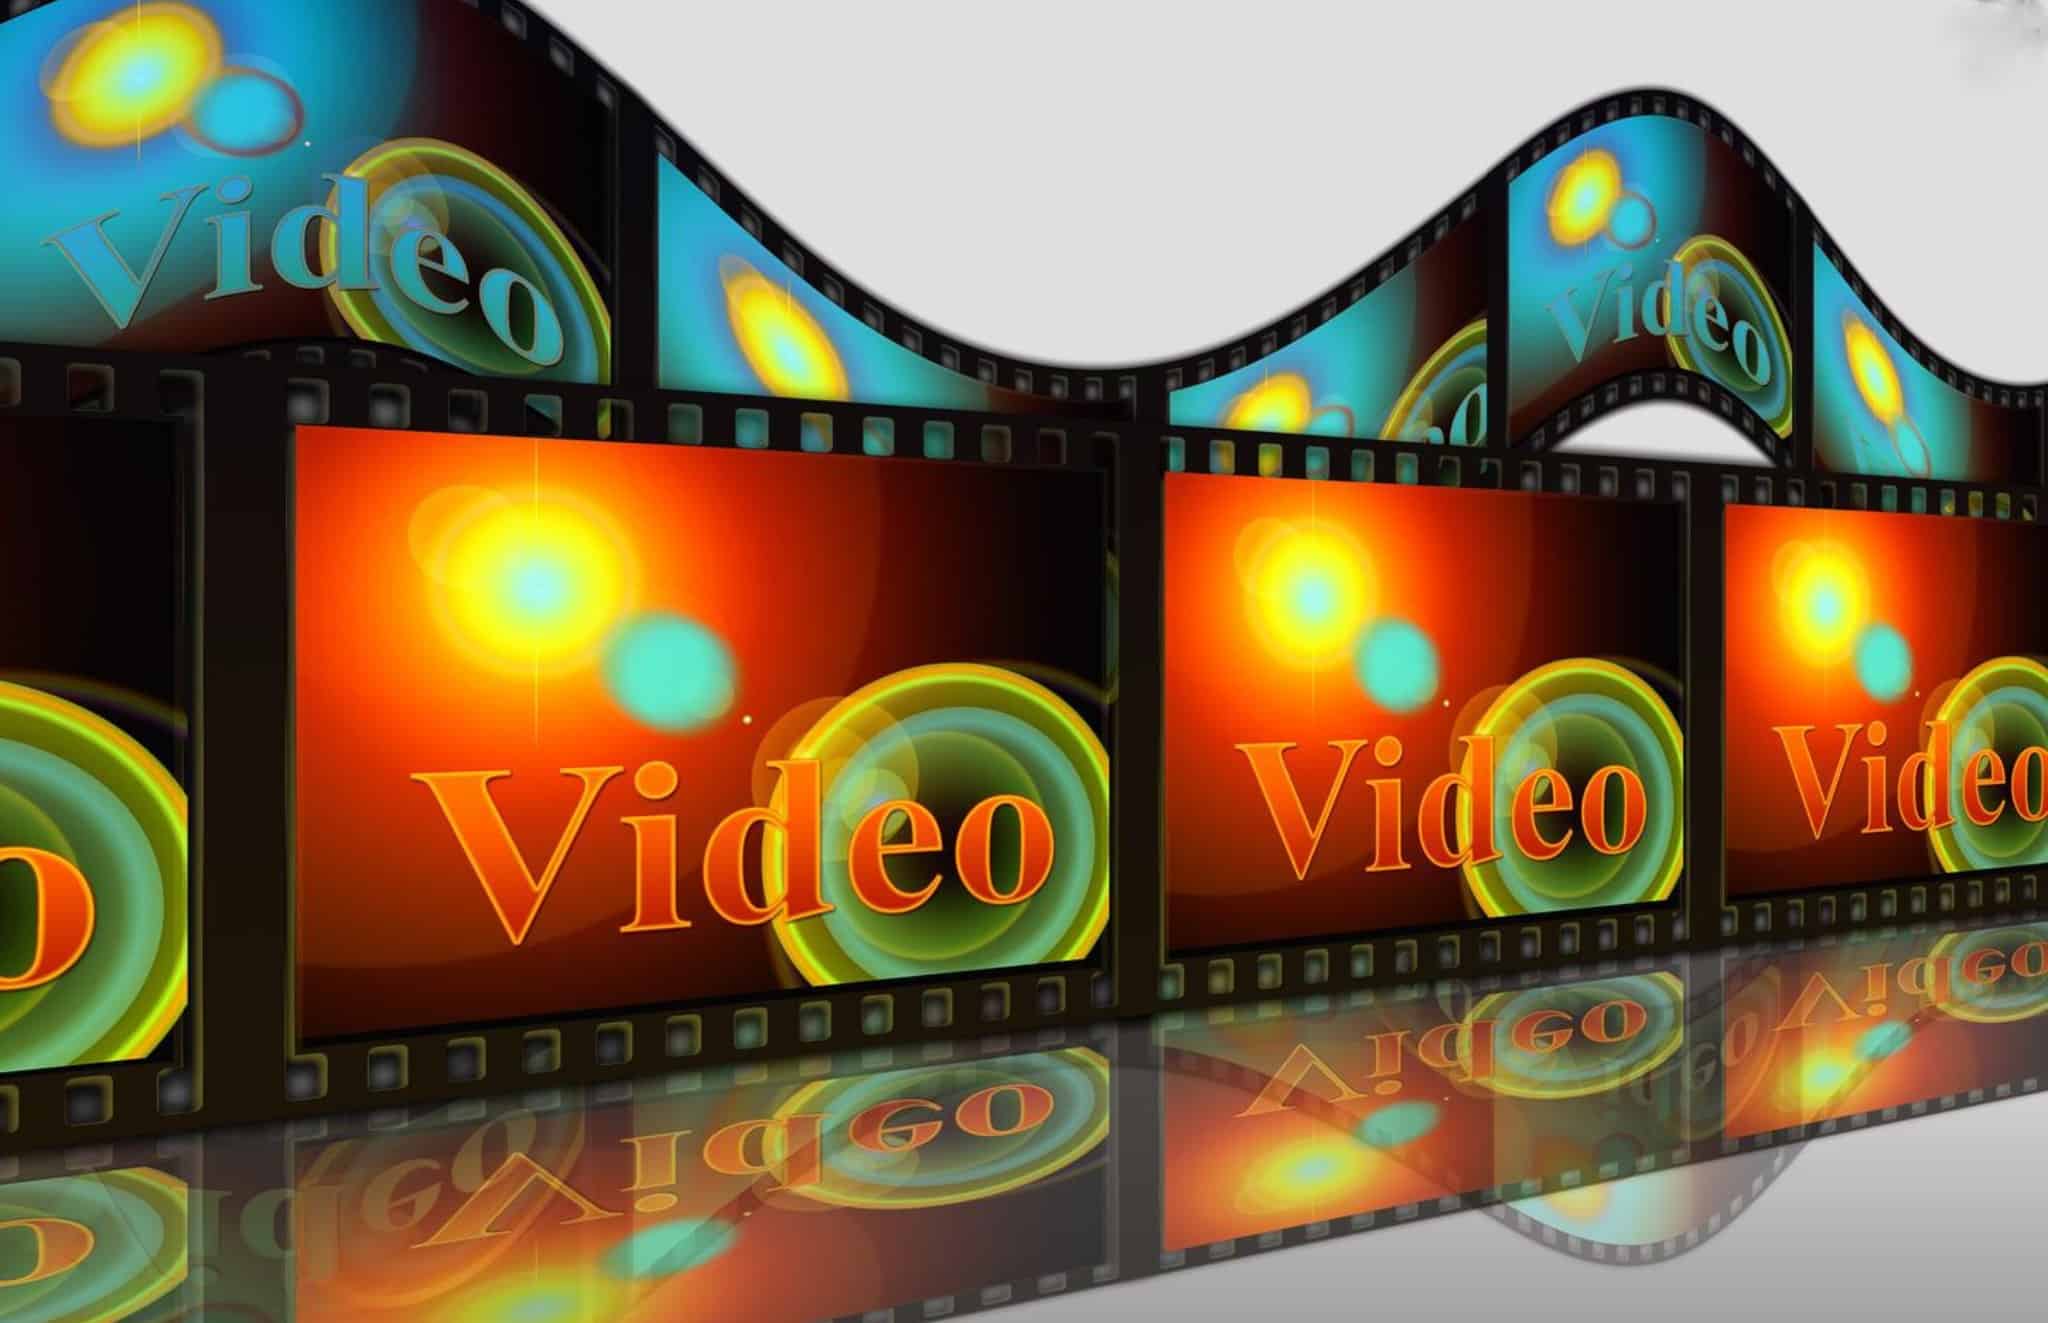 Video Marketing vs Video Production